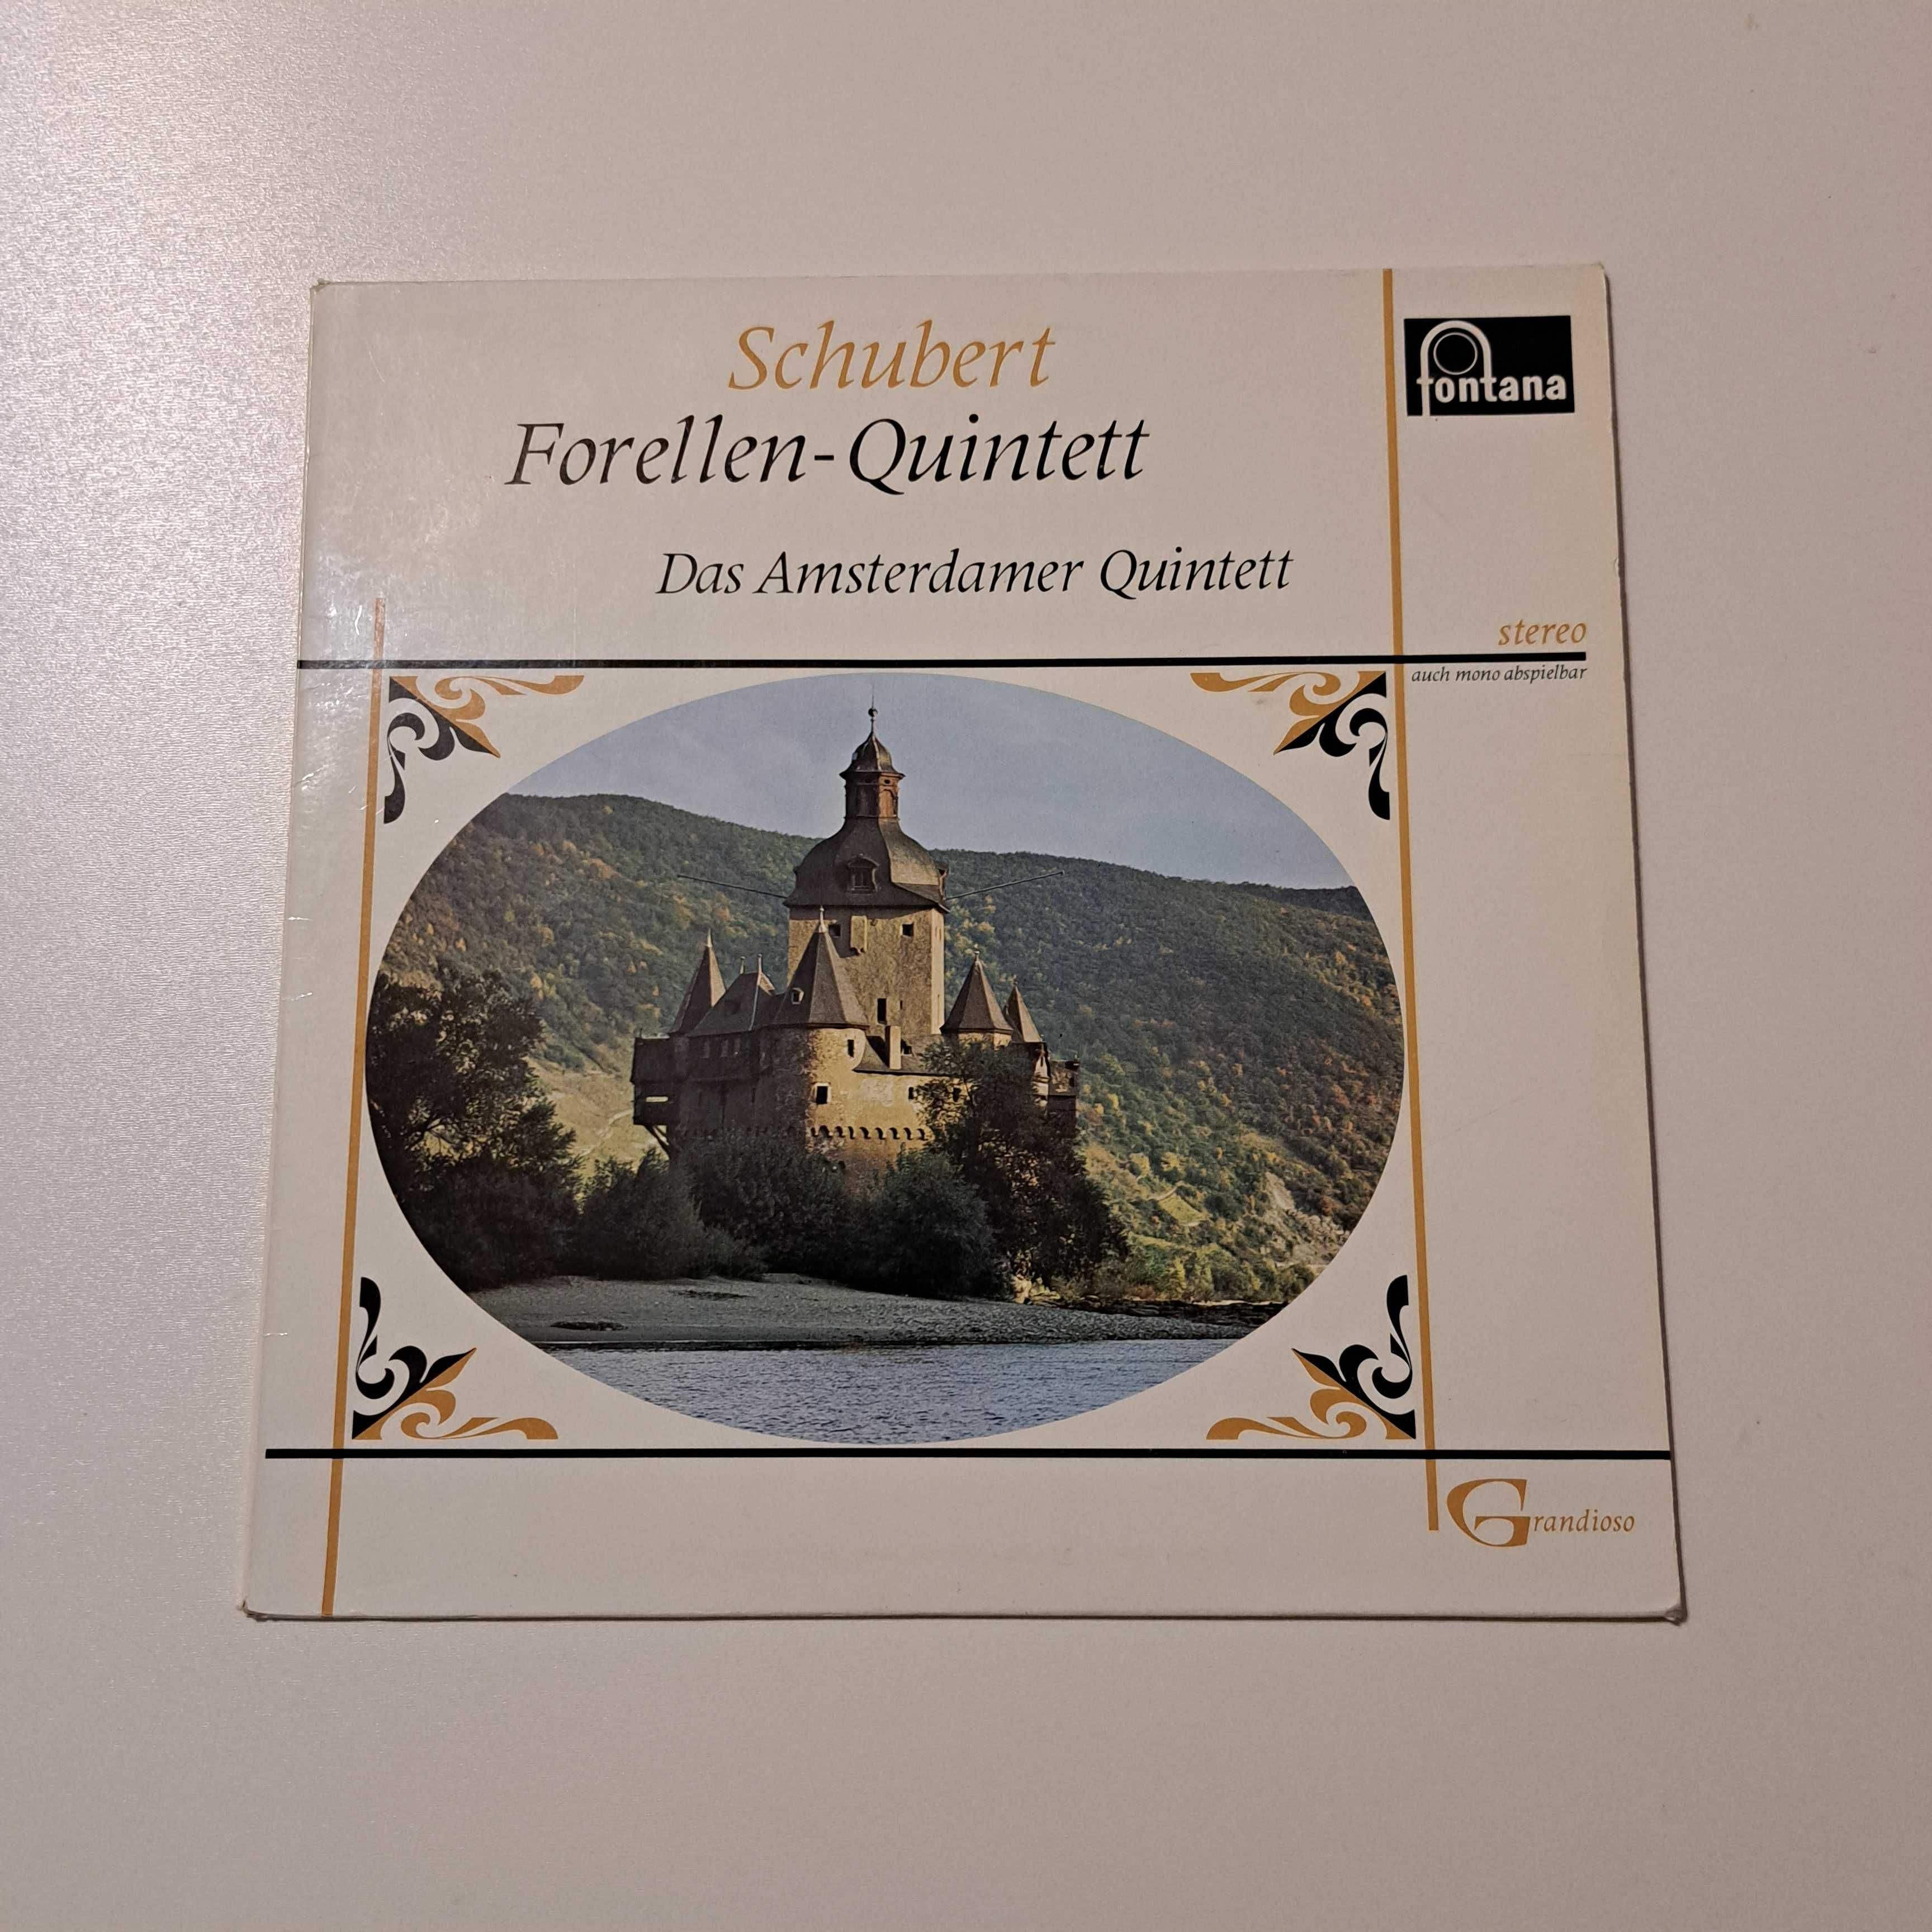 Płyta Winylowa  Schubert Forellen - Quintett